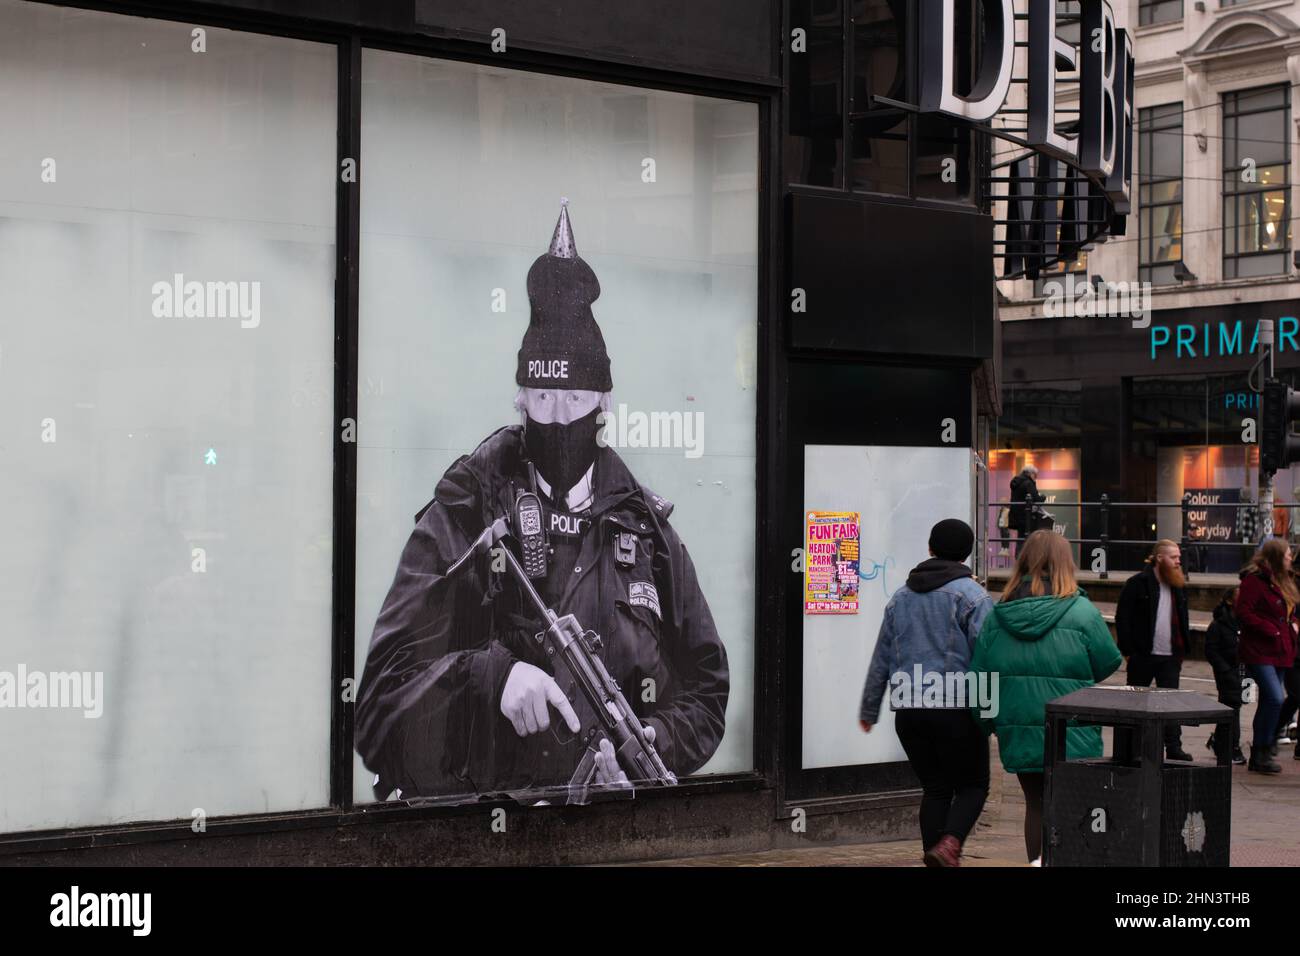 Boris Johnson dressed as a Metropolitan Police officer. Poster on window of former Debenhams department store, Market Street, Manchester. Stock Photo